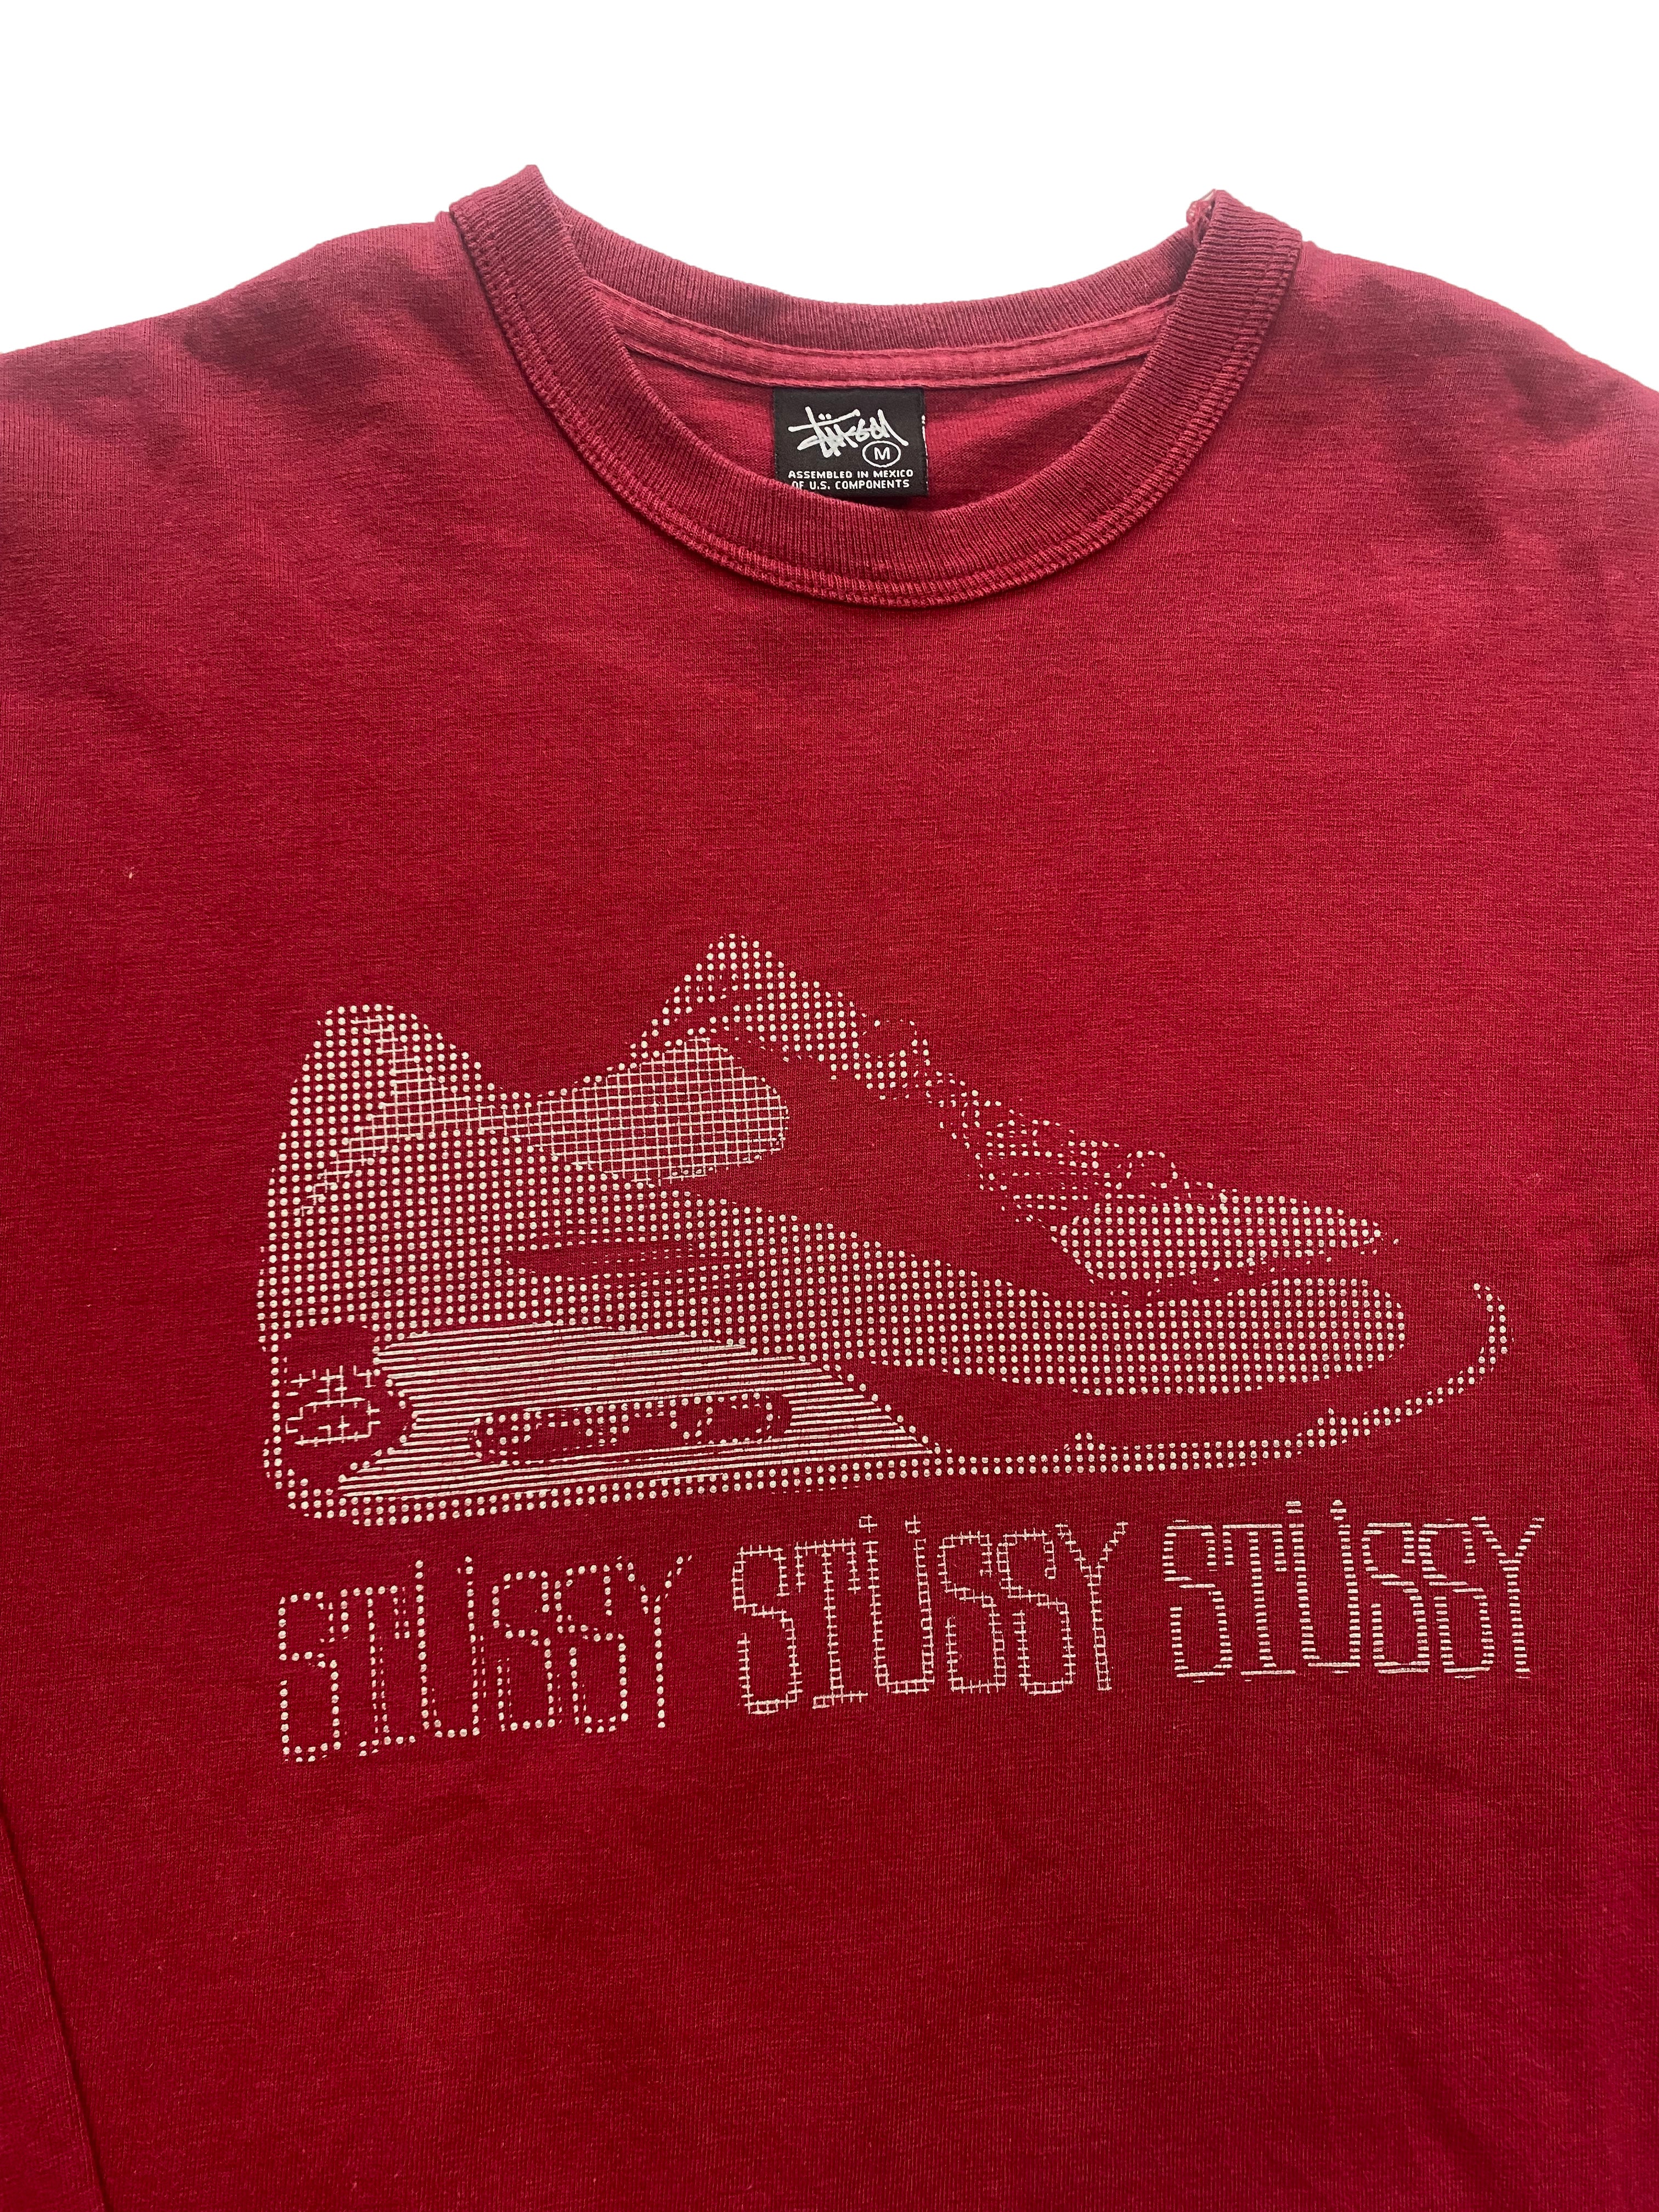 Stussy Air Max 90 Long Sleeve T-shirt 00's